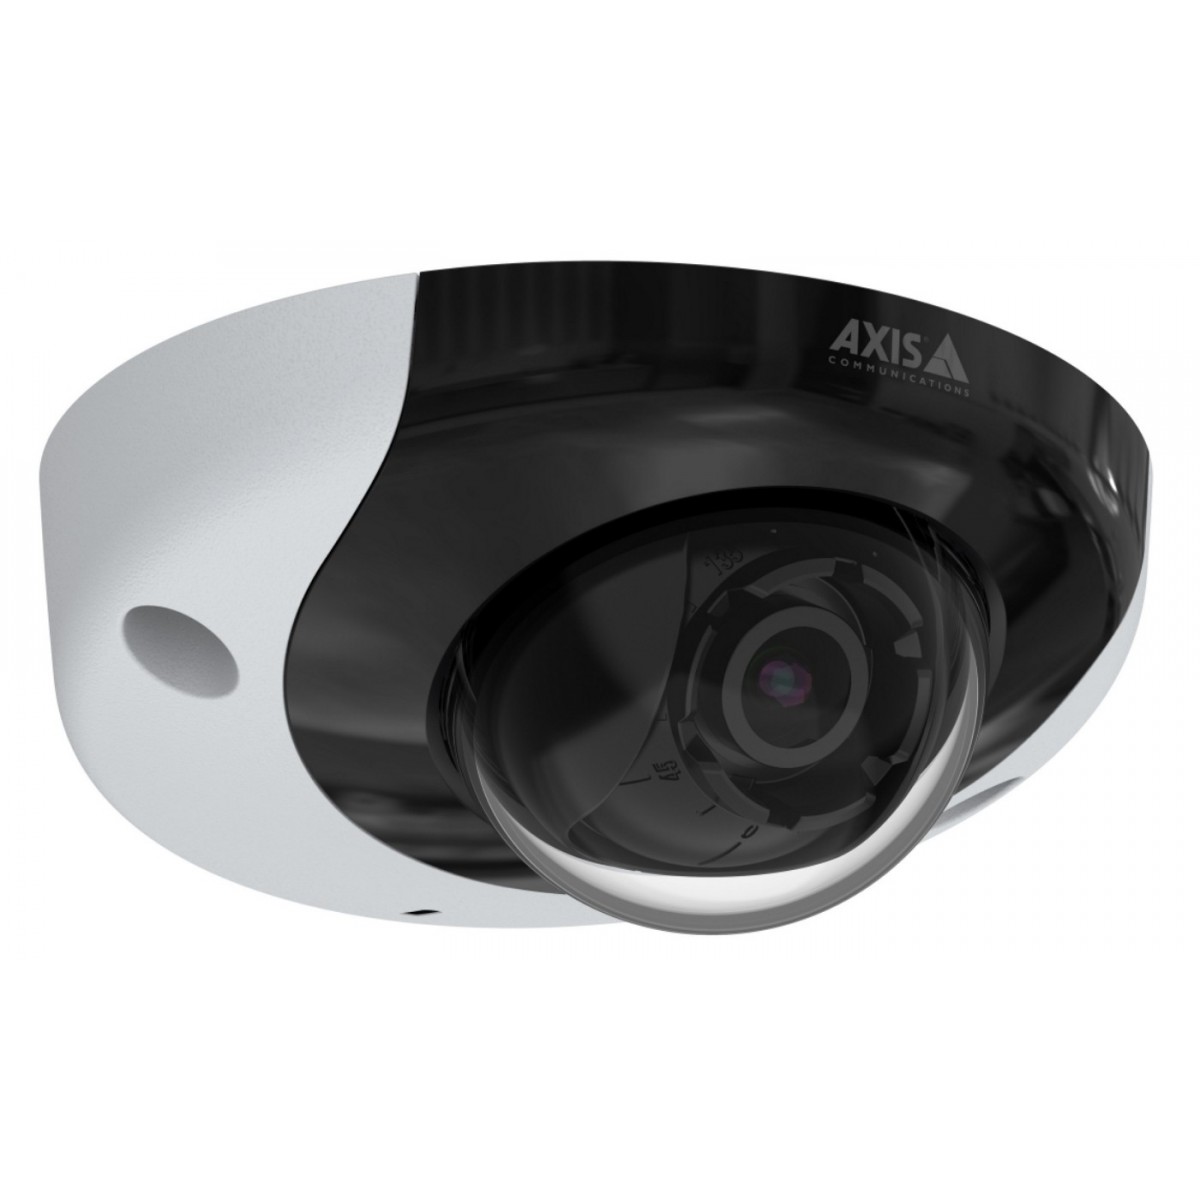 Axis P3935-LR M12 - IP security camera - Wired - Digital PTZ - EN 55032 Class A - EN 55035 - EN 61000-6-1 - EN 61000-6-2 - FCC P